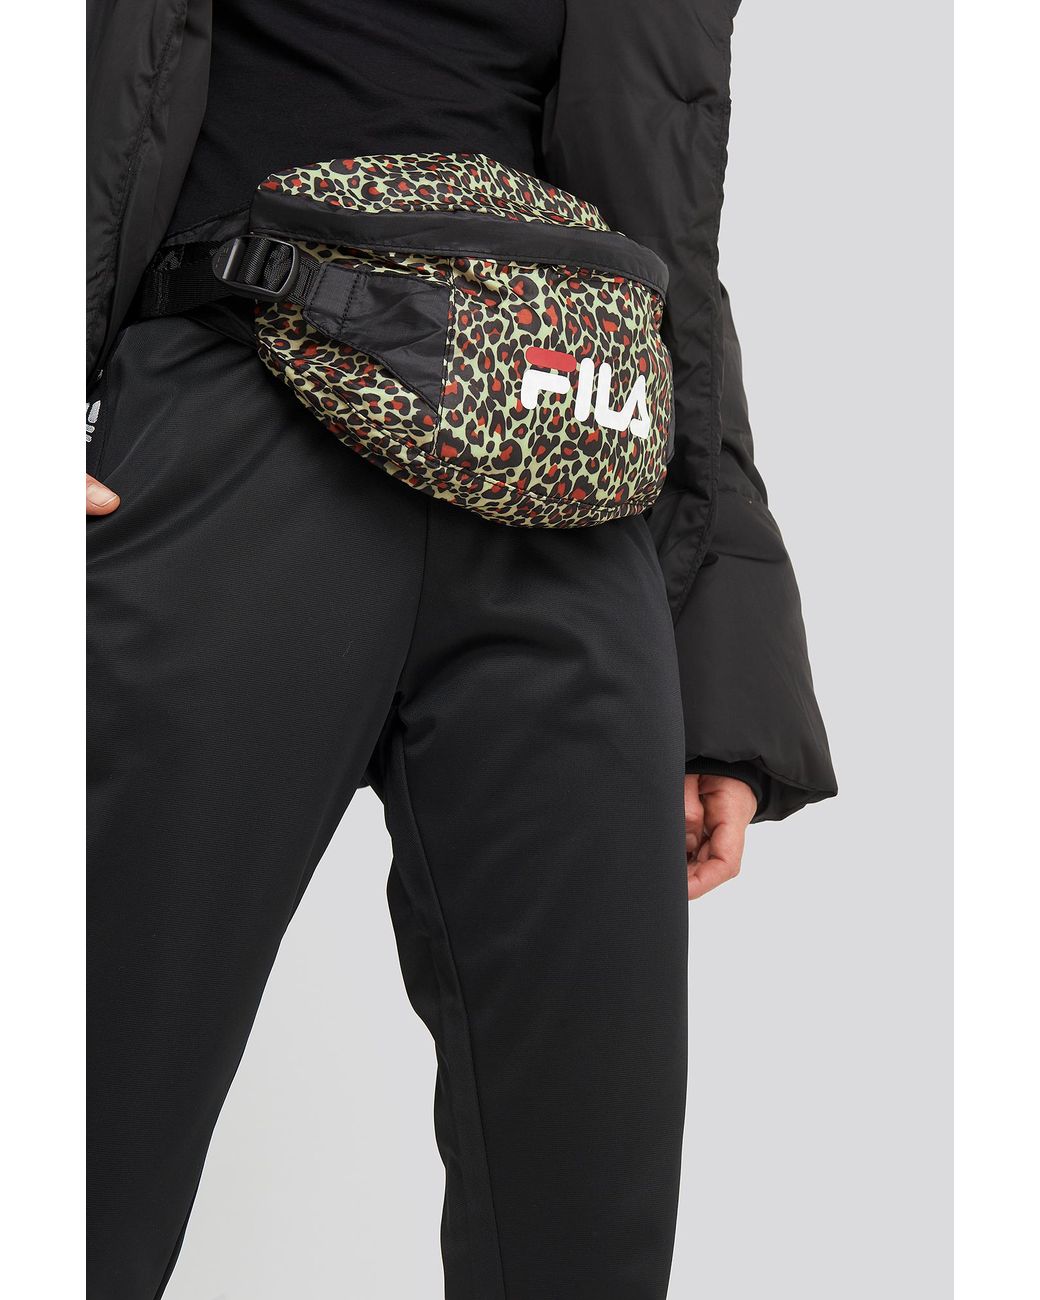 Fila Synthetic Multicolor Light Weight Waist Bag Göteborg in Black Leopard  Print (Black) - Lyst